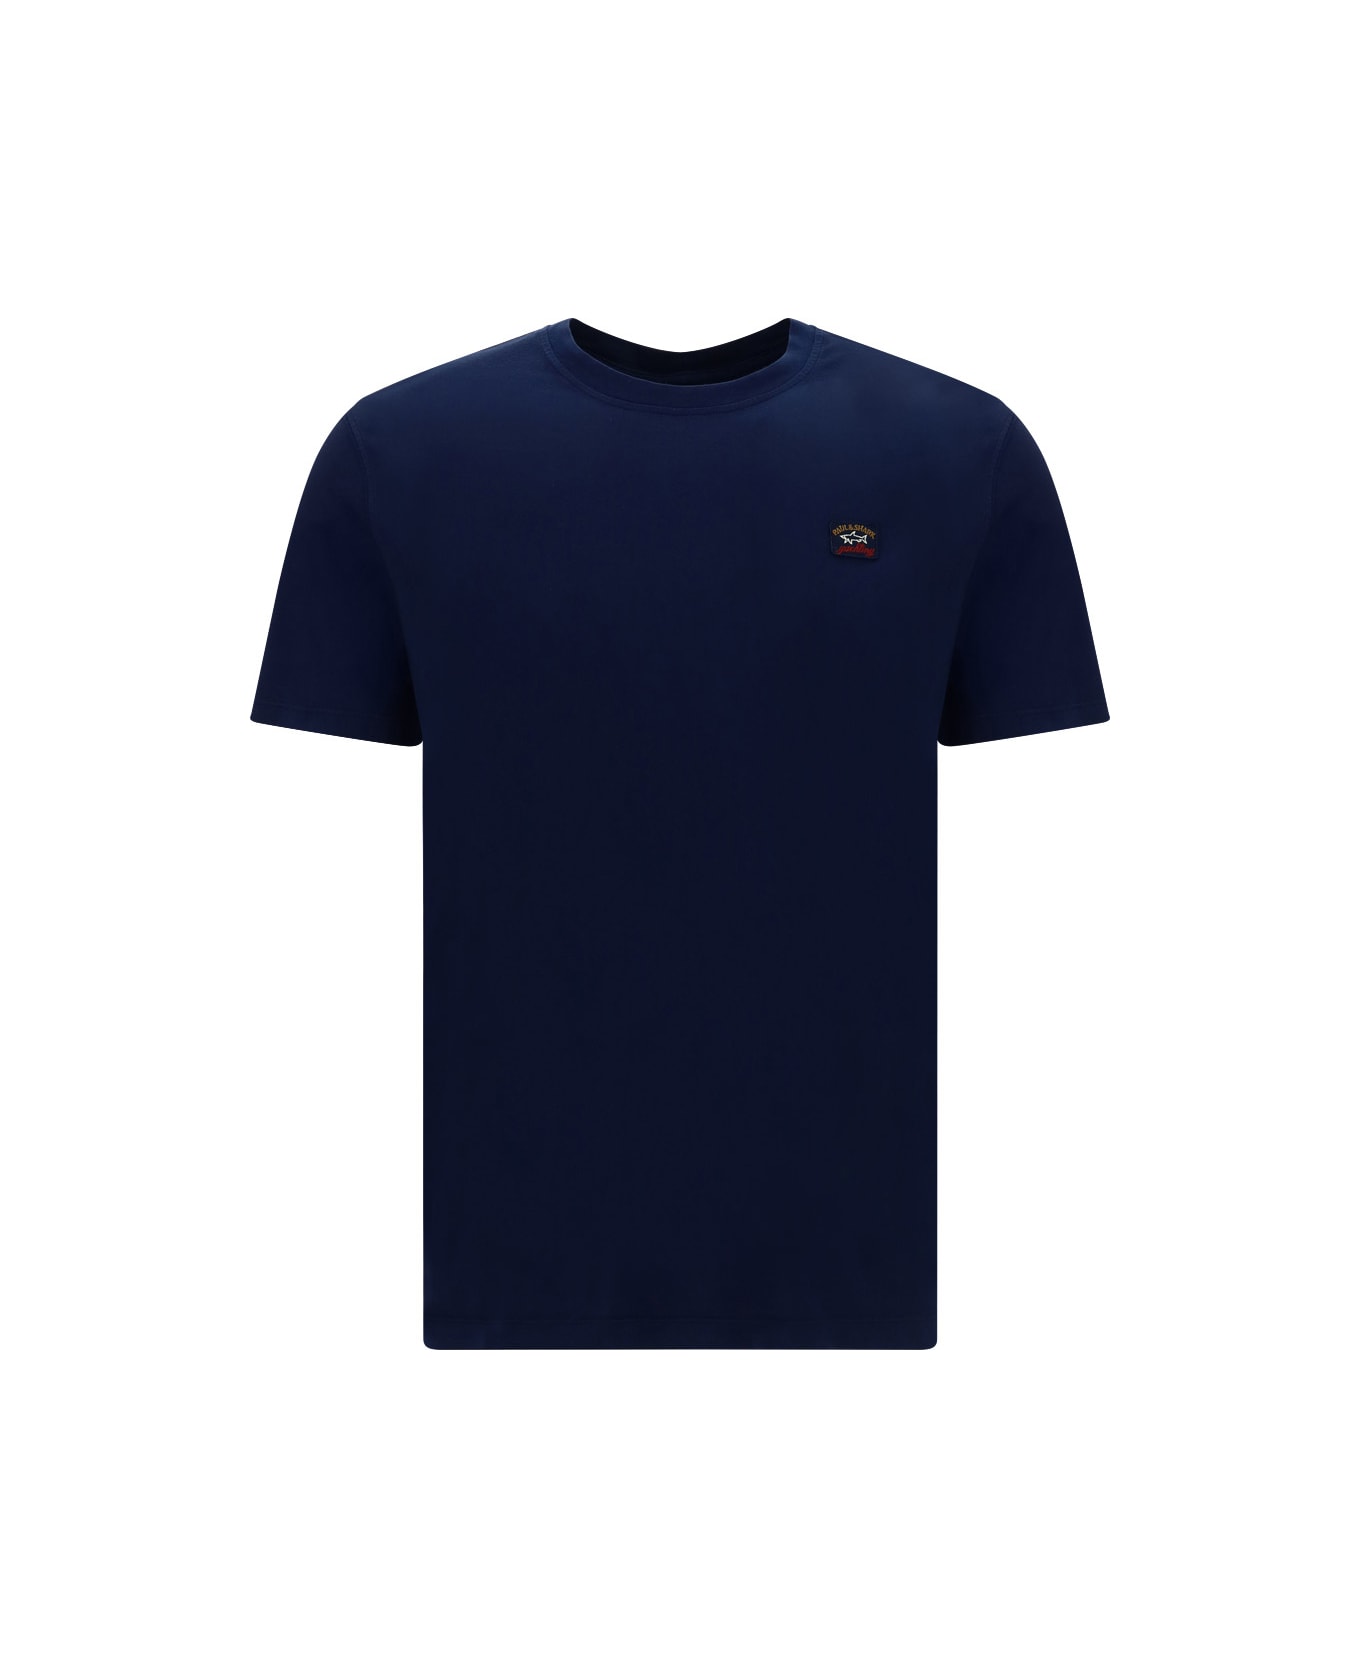 Paul&Shark T-shirt - Blu